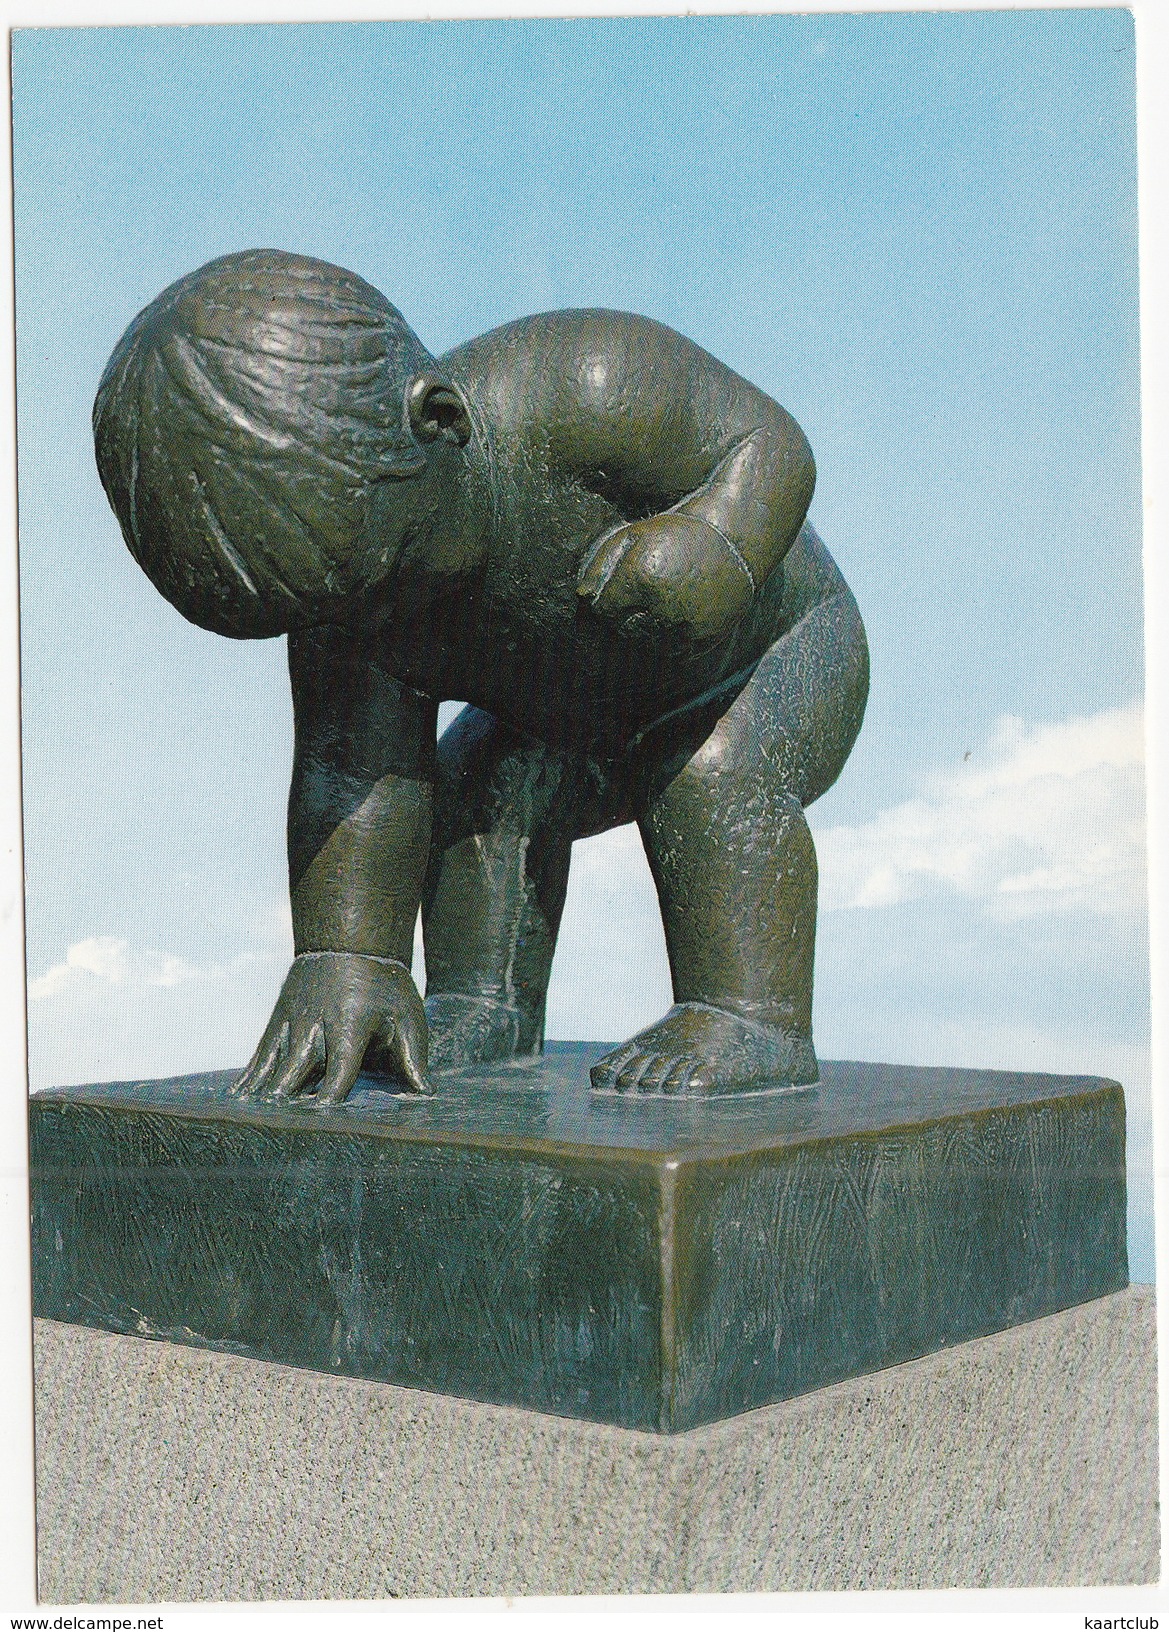 Oslo - Vigelandsparken - Bronze Kid - The Vigeland  Sculpture Park -  (Norge/Norway) - Noorwegen